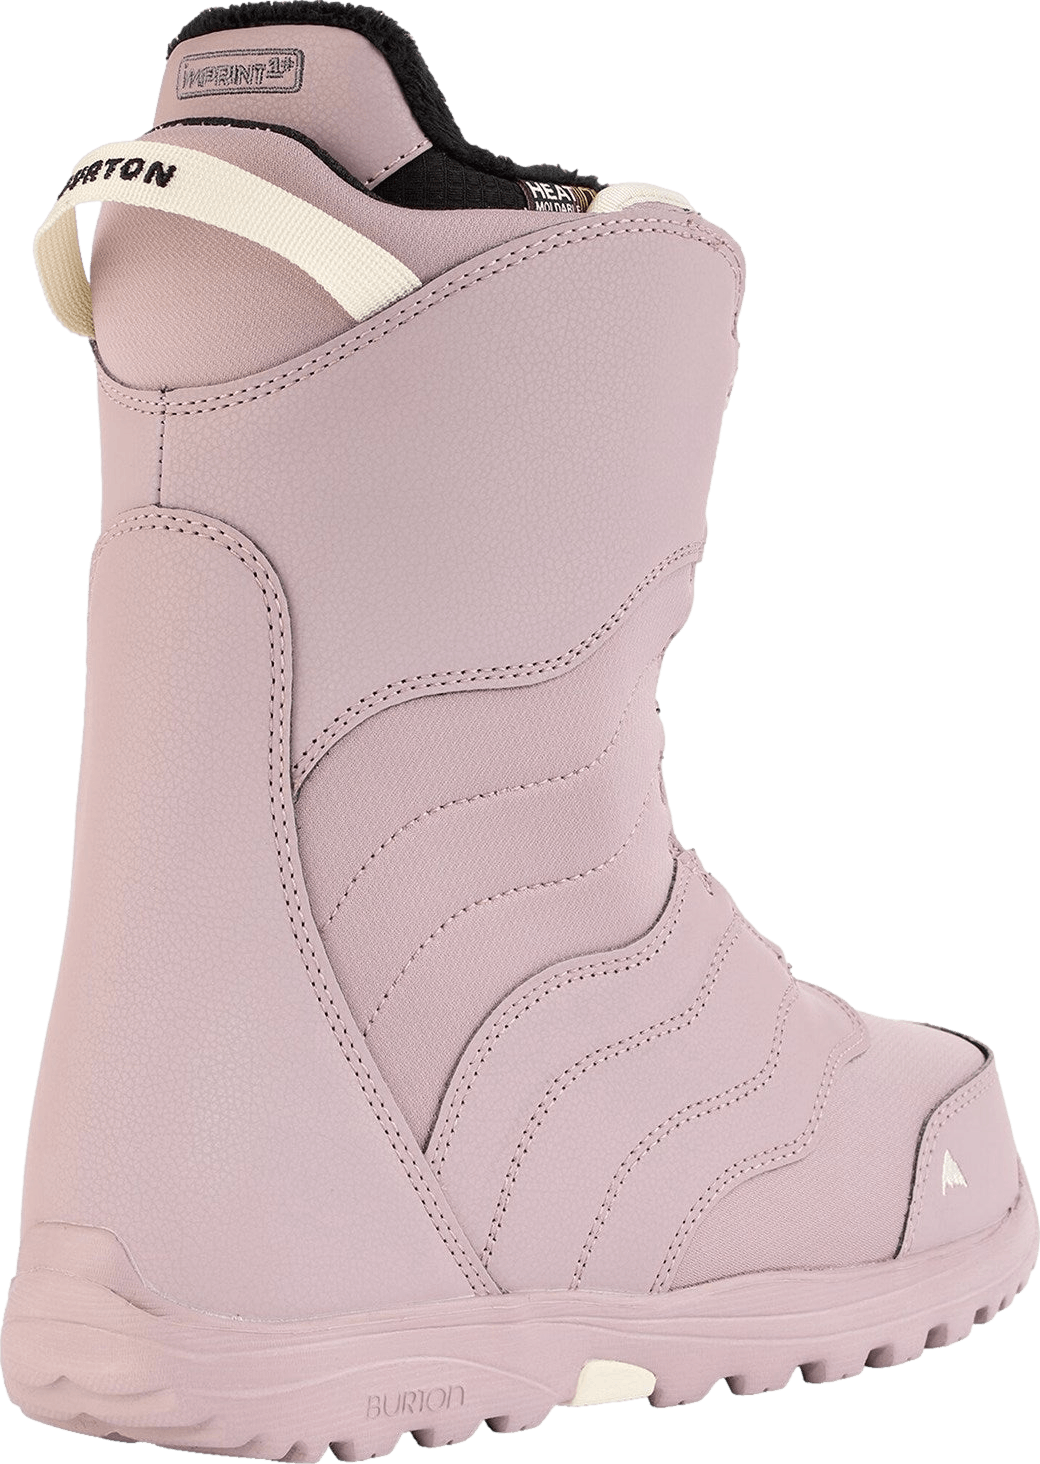 Burton Mint BOA Snowboard Boots · Women's · 2024